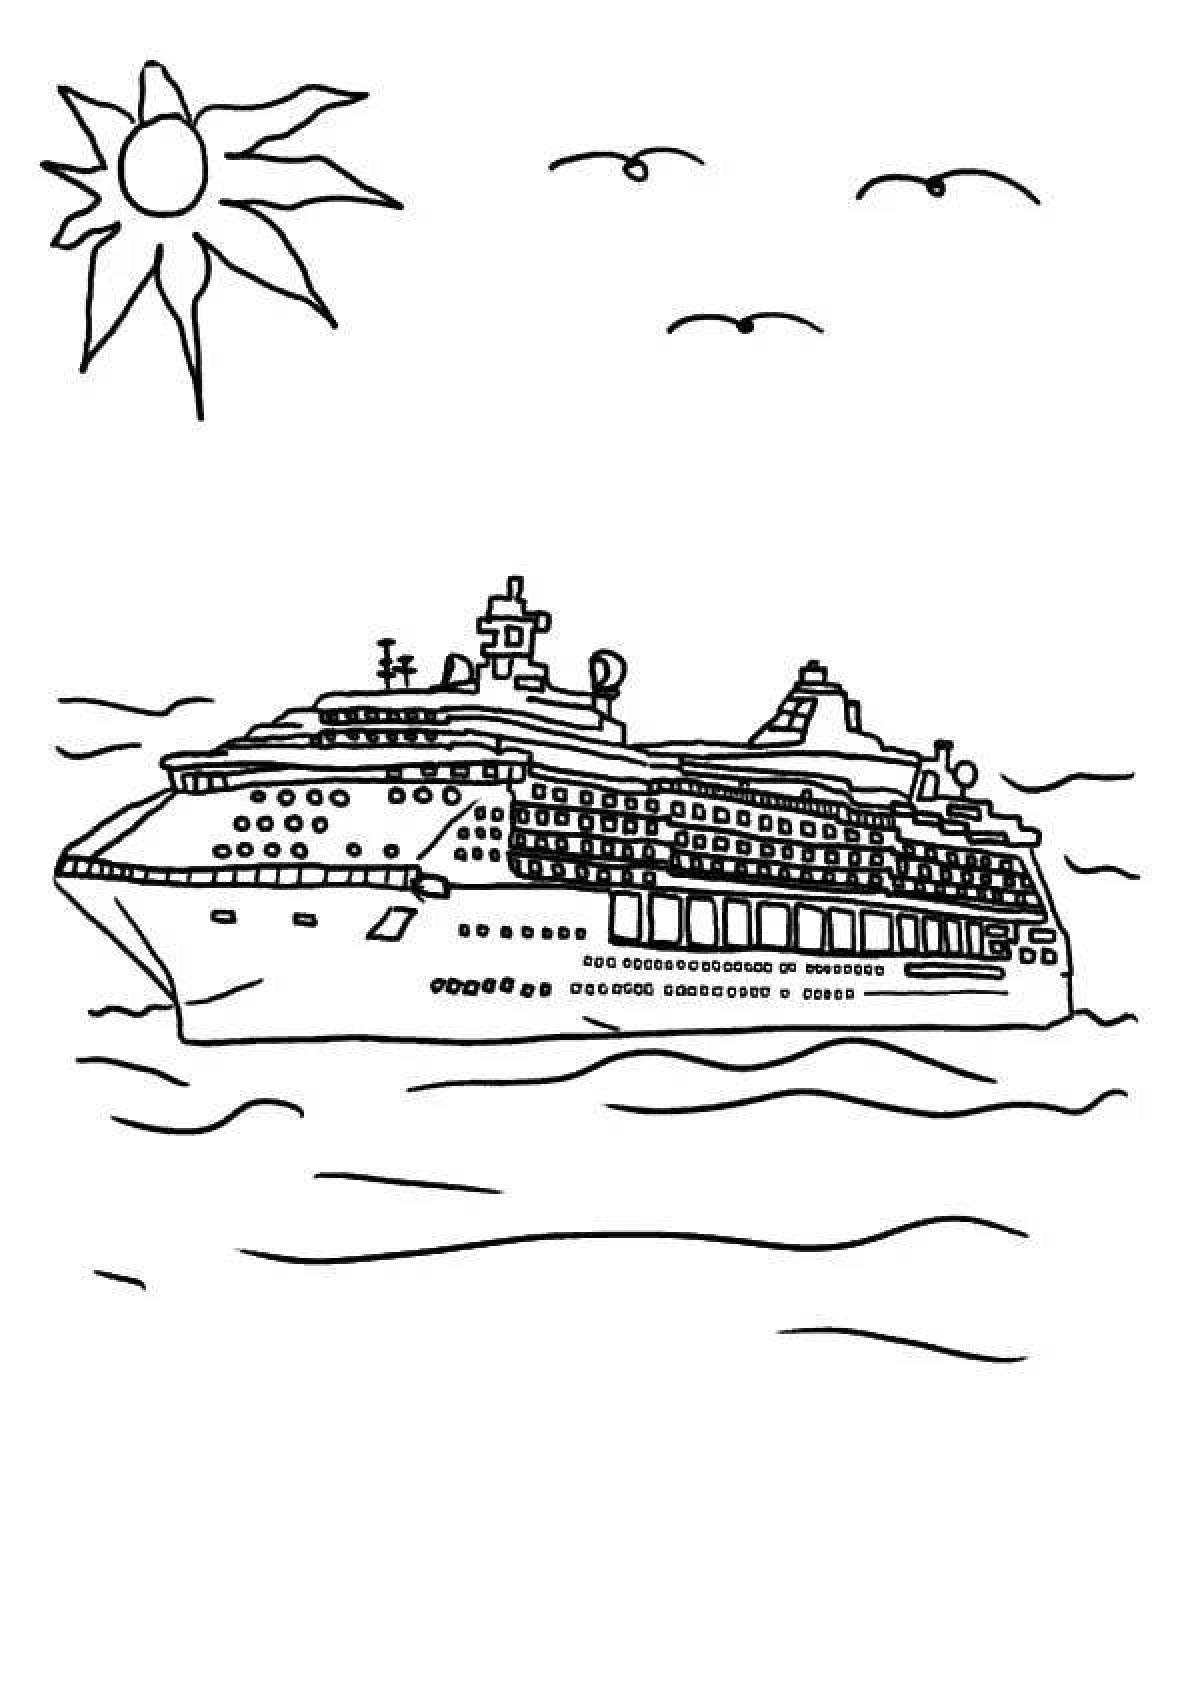 Coloring book shining cruise ship